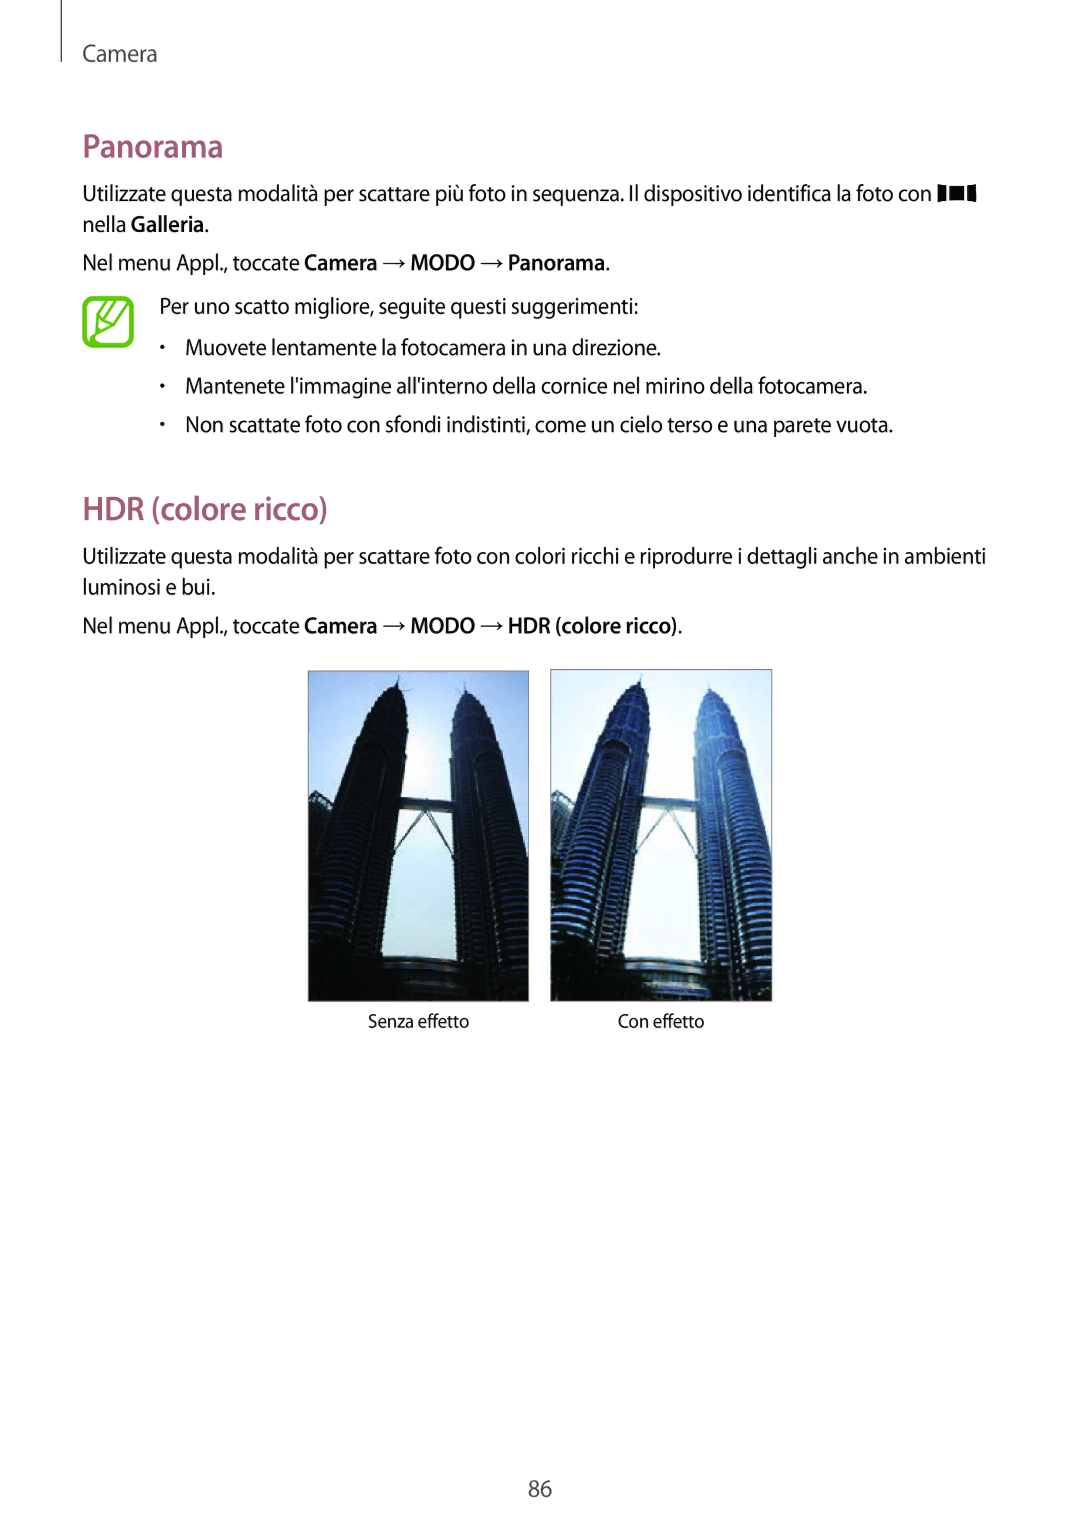 Samsung SM-T805NZWAITV, SM-T805NZWAXEO, SM-T805NTSAITV Panorama, Nel menu Appl., toccate Camera →MODO →HDR colore ricco 